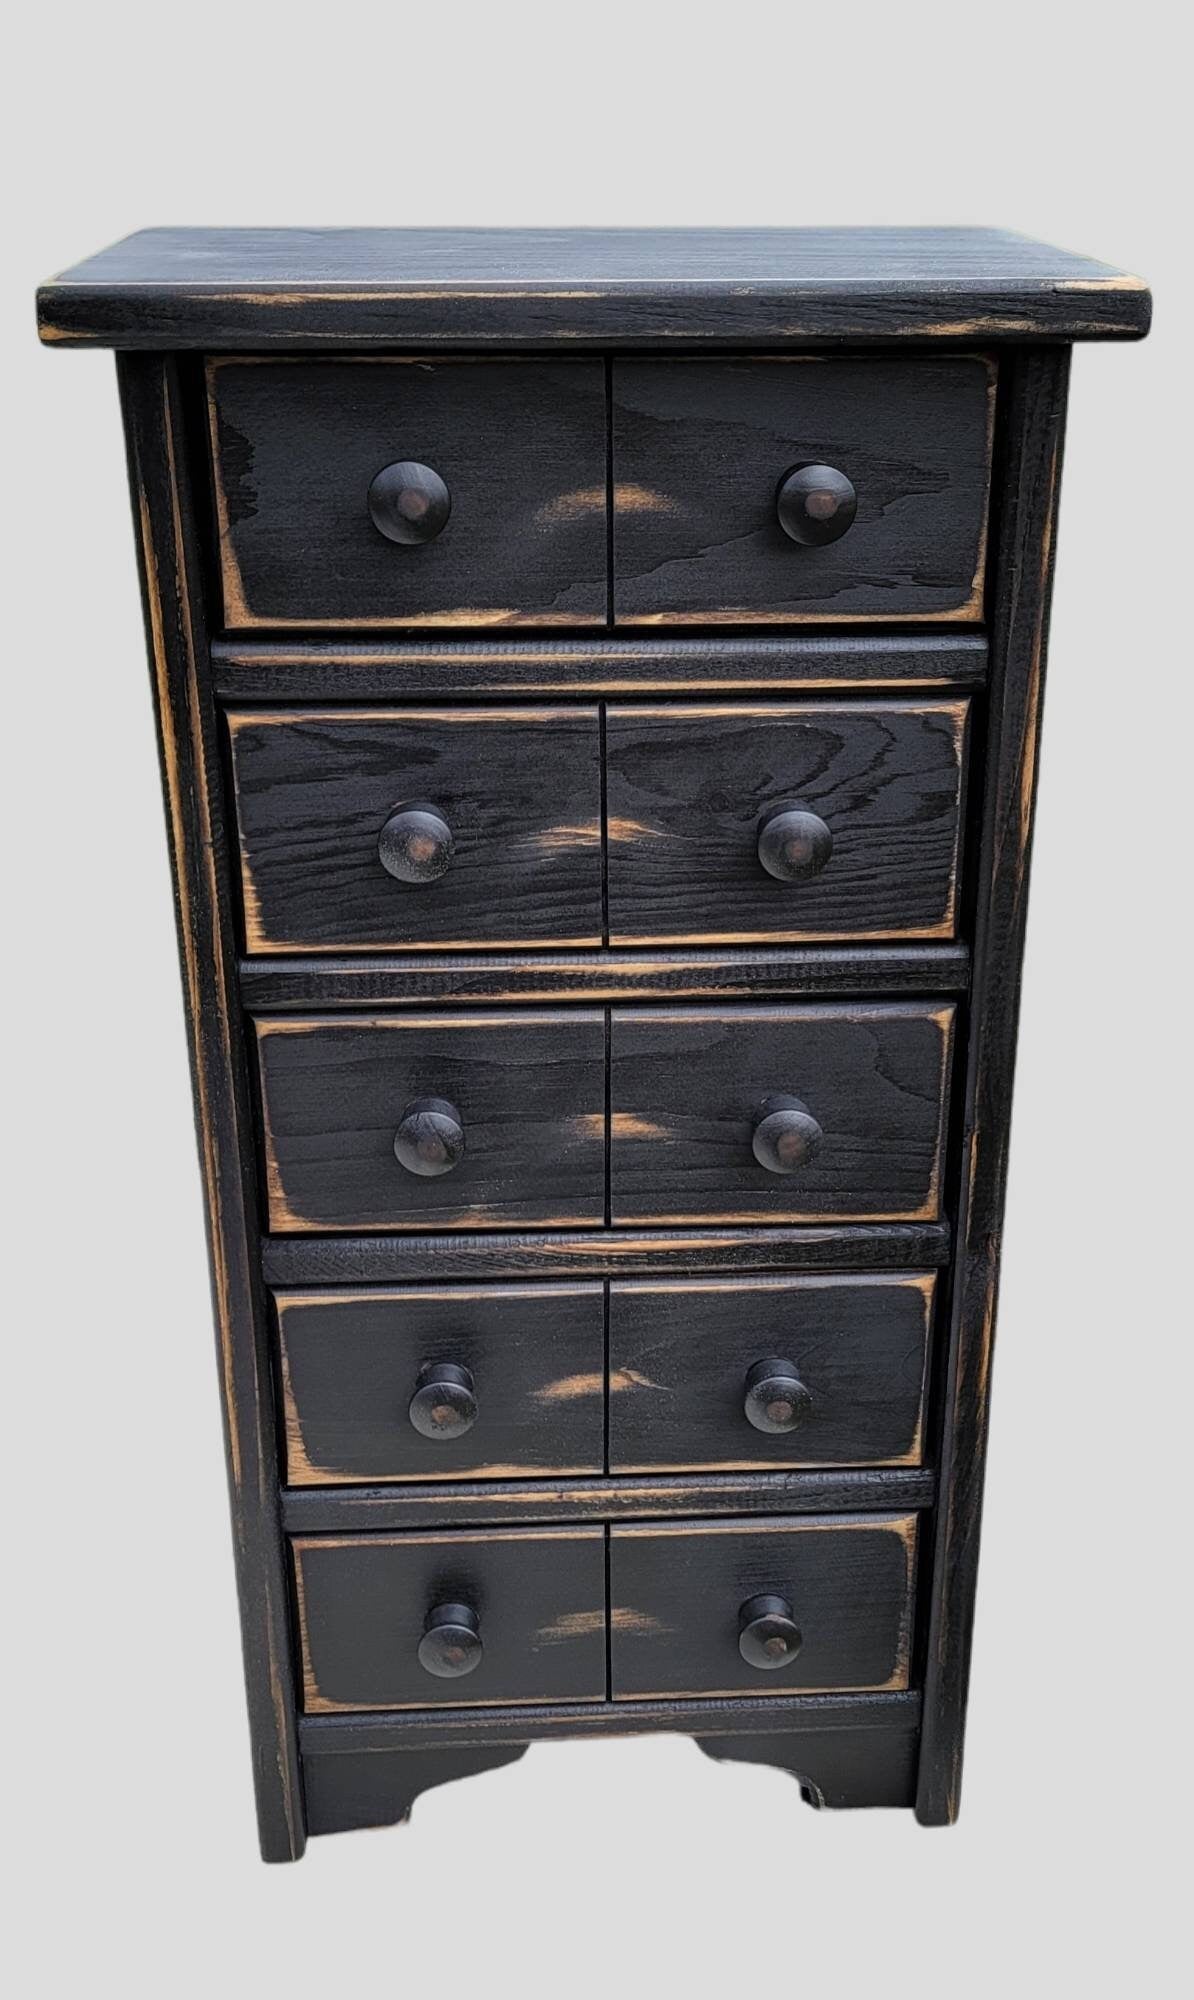 Handmade Wood Apothecary Cabinet, 5 Drawer Storage Organizer, Rustic Home Decor